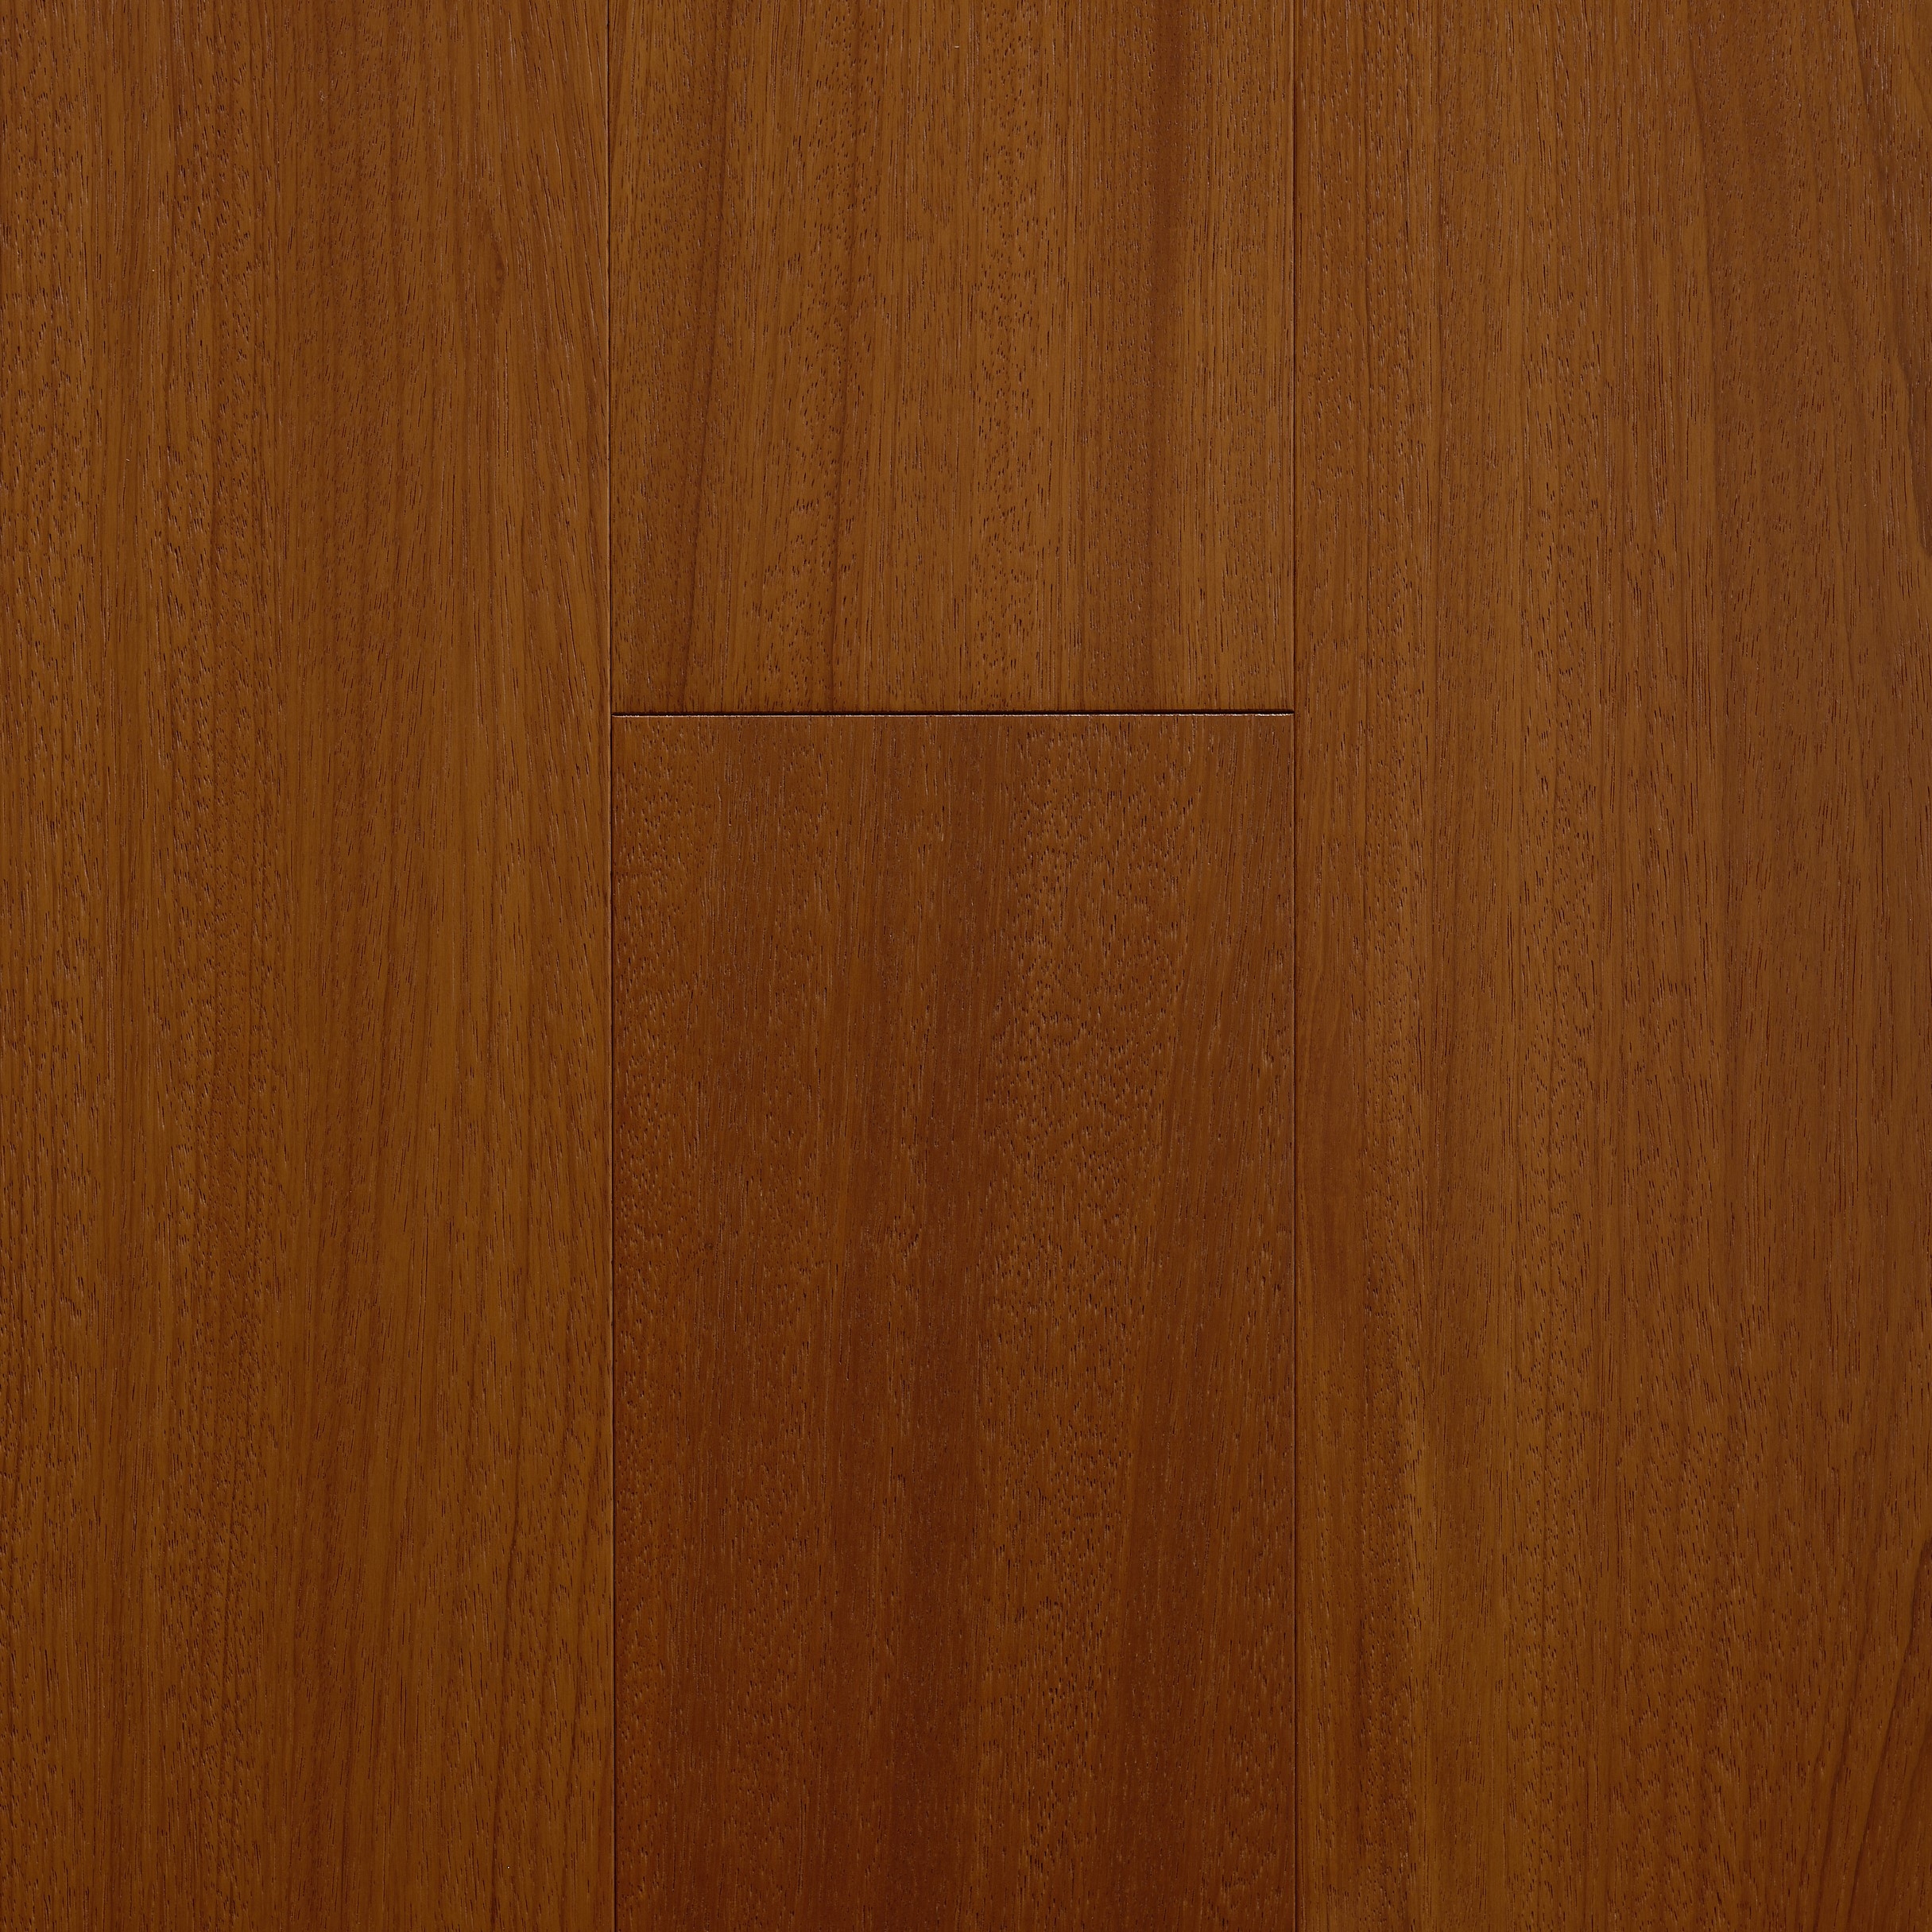 Immagine di un parquet in legno di doussiè